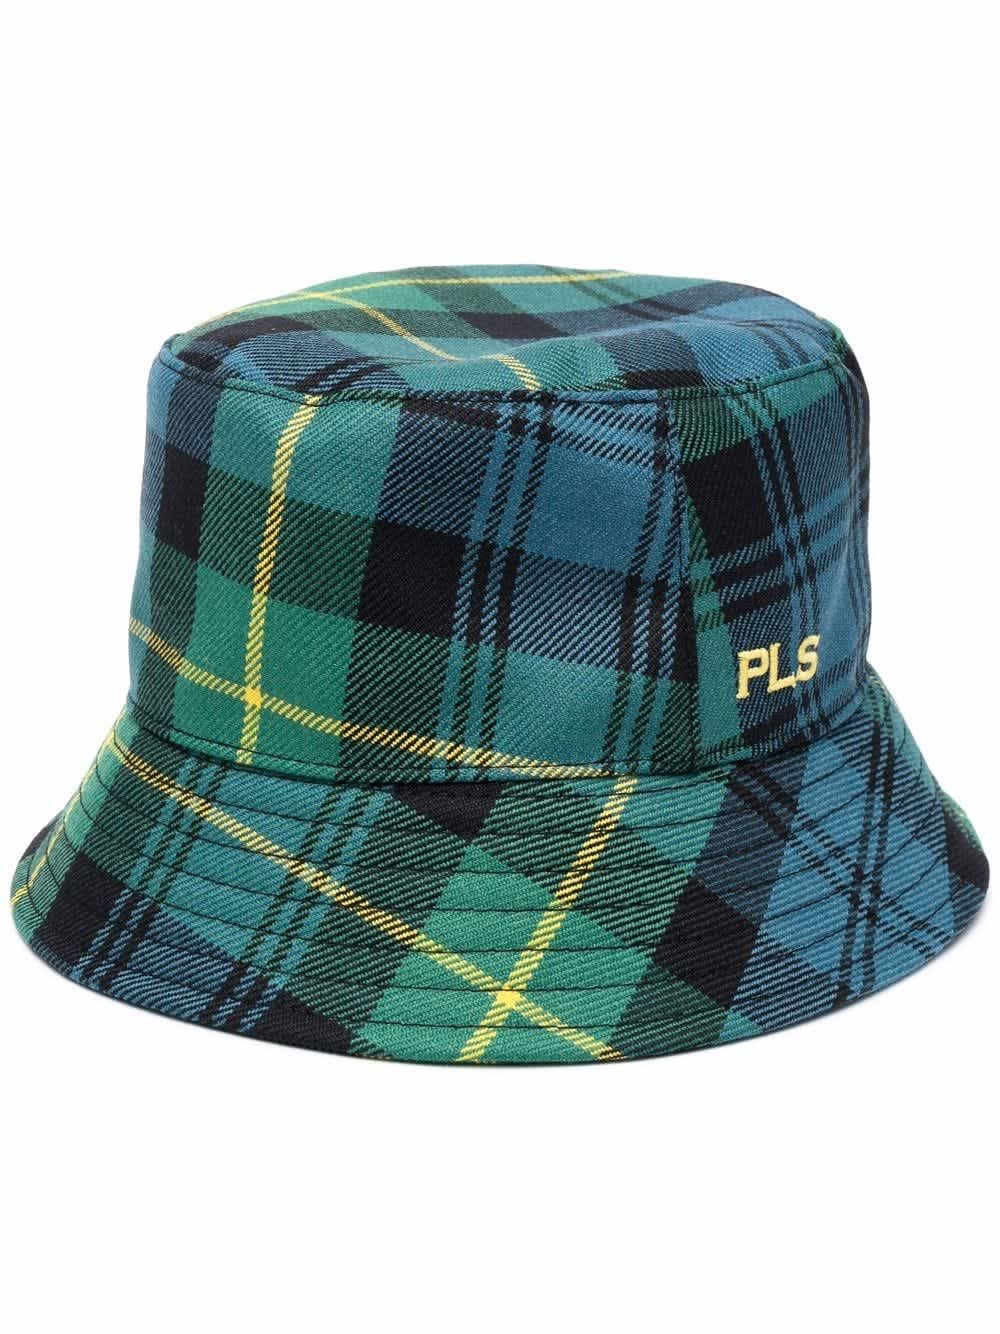 Philosophy Bucket hat (Size: L)